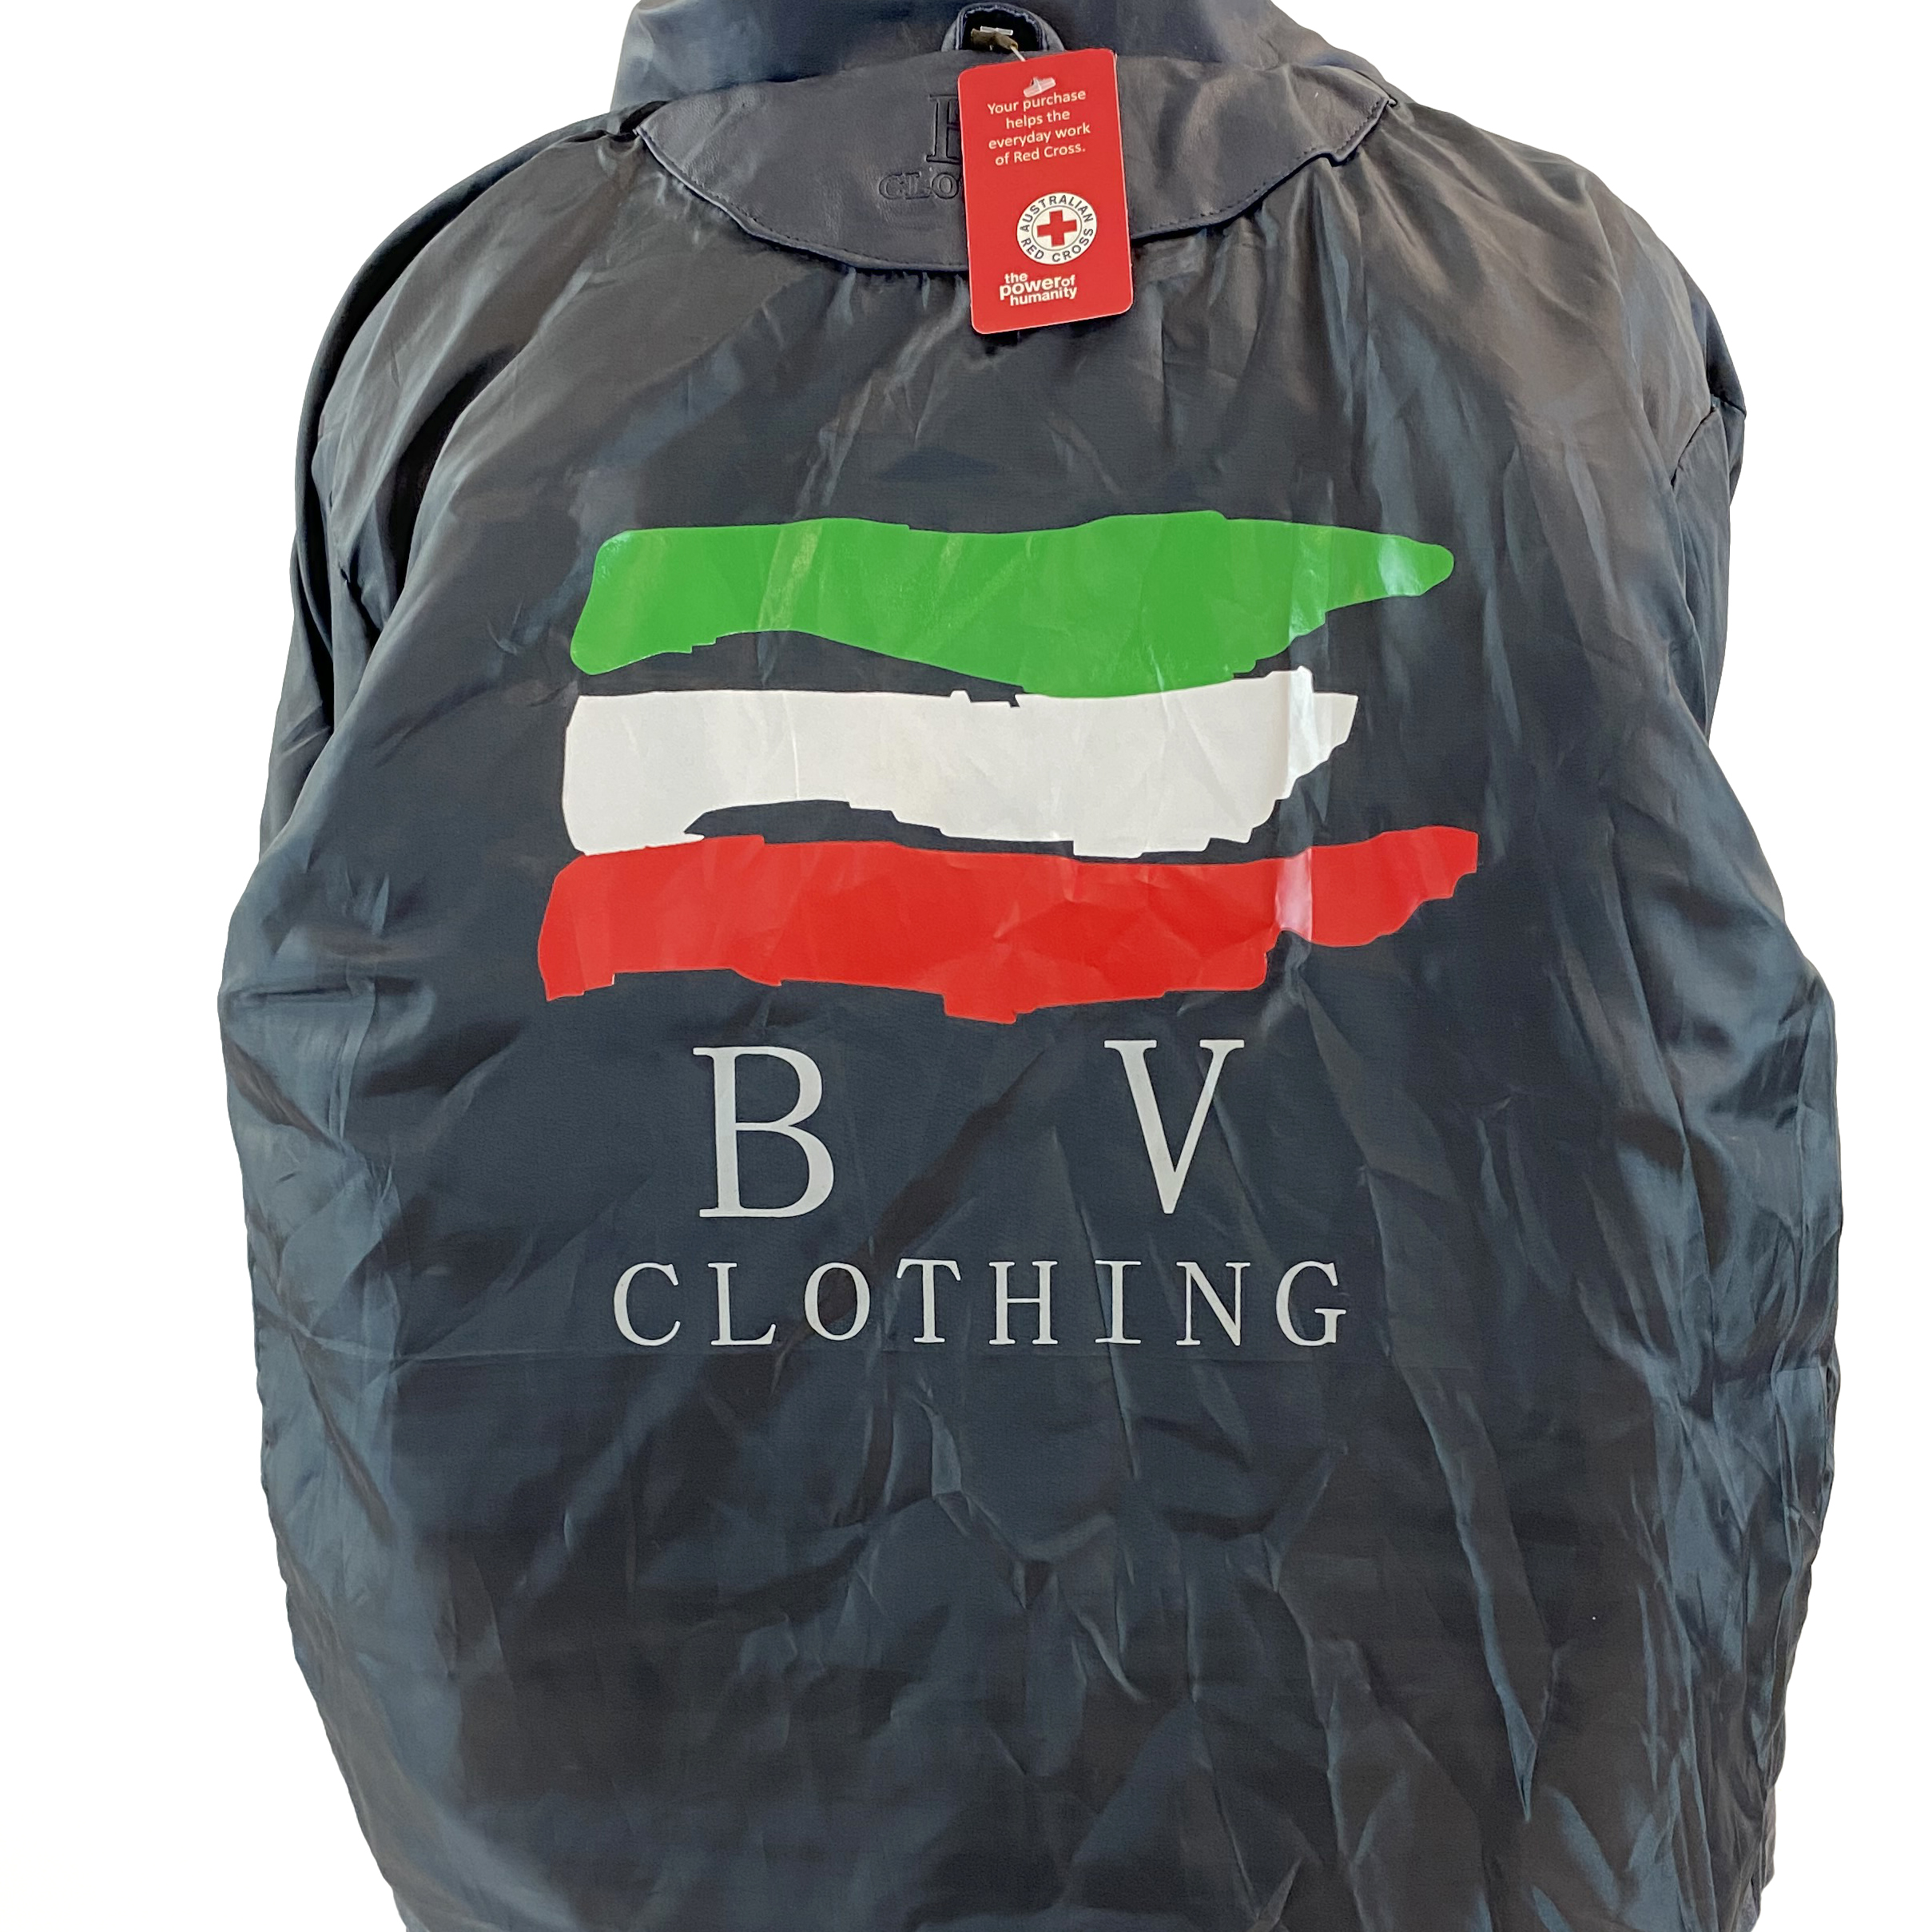 BV Grey-Blue Leather Jacket 